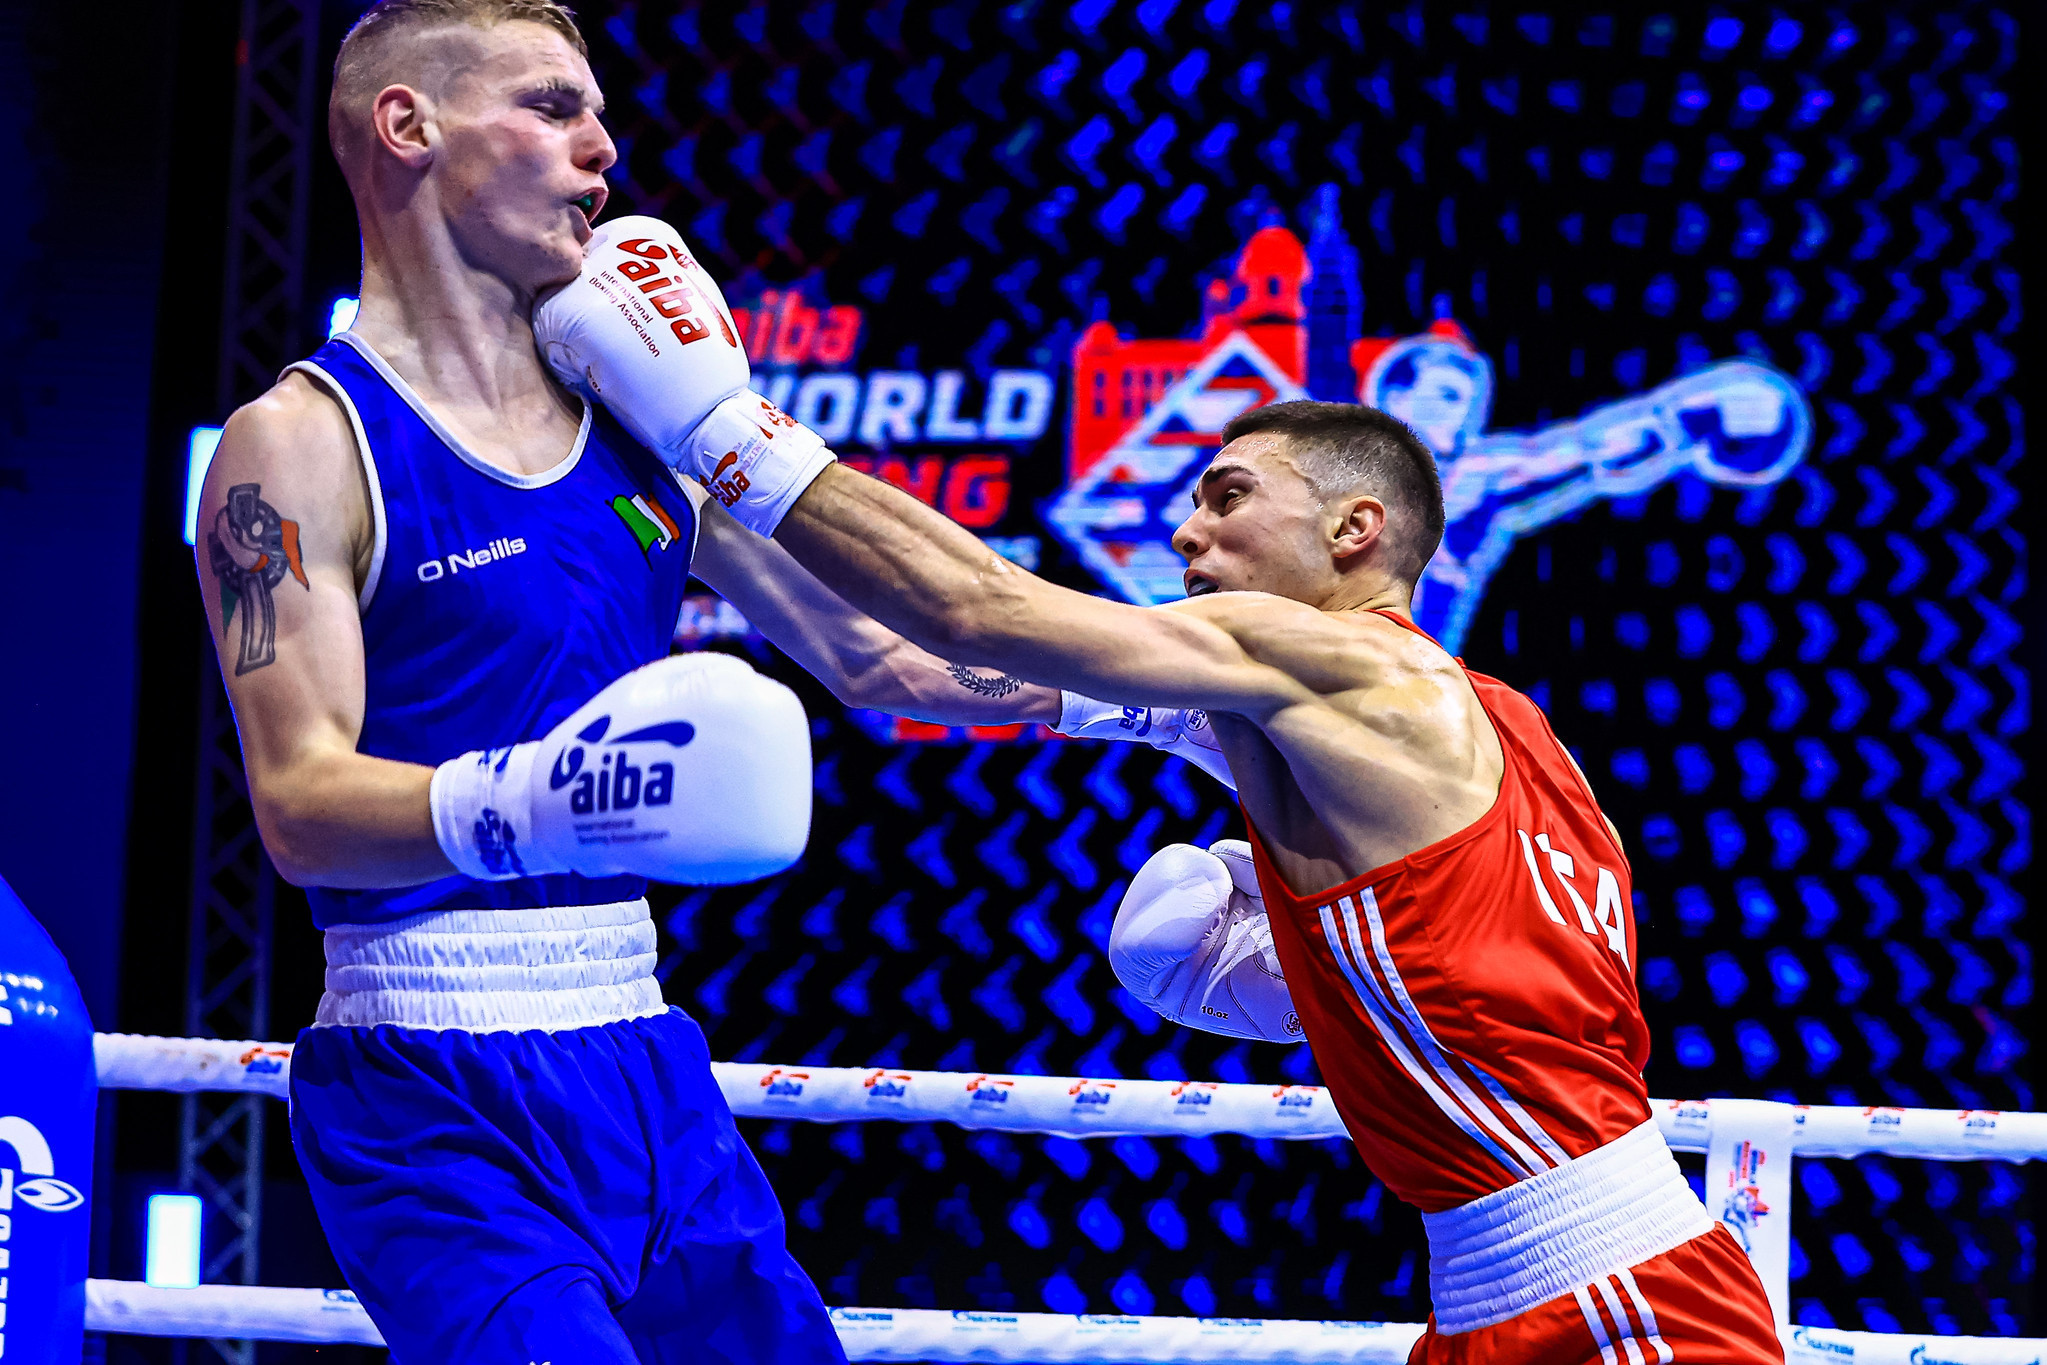 Gianluigi Malanga of Italy landing a punch on Irish boxer Brandon McCarthy ©AIBA